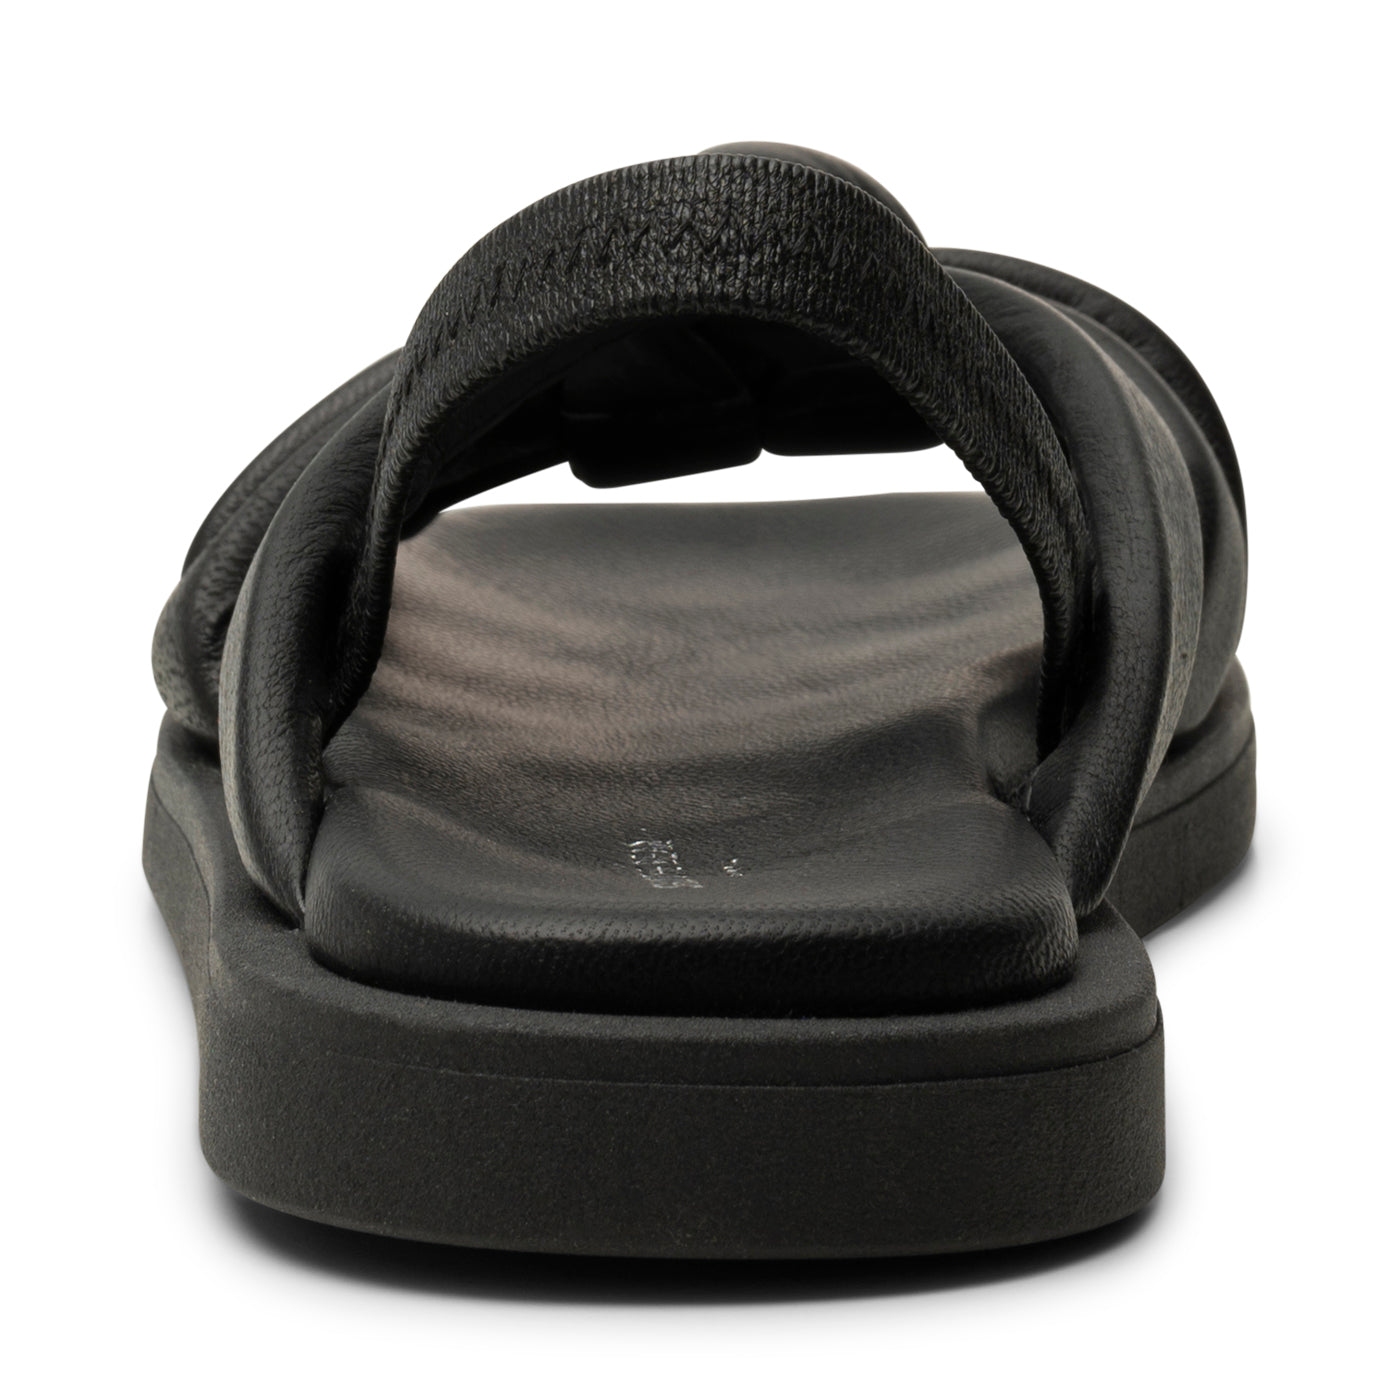 SHOE THE BEAR WOMENS Krista slingback sandal leather Sandals 110 BLACK